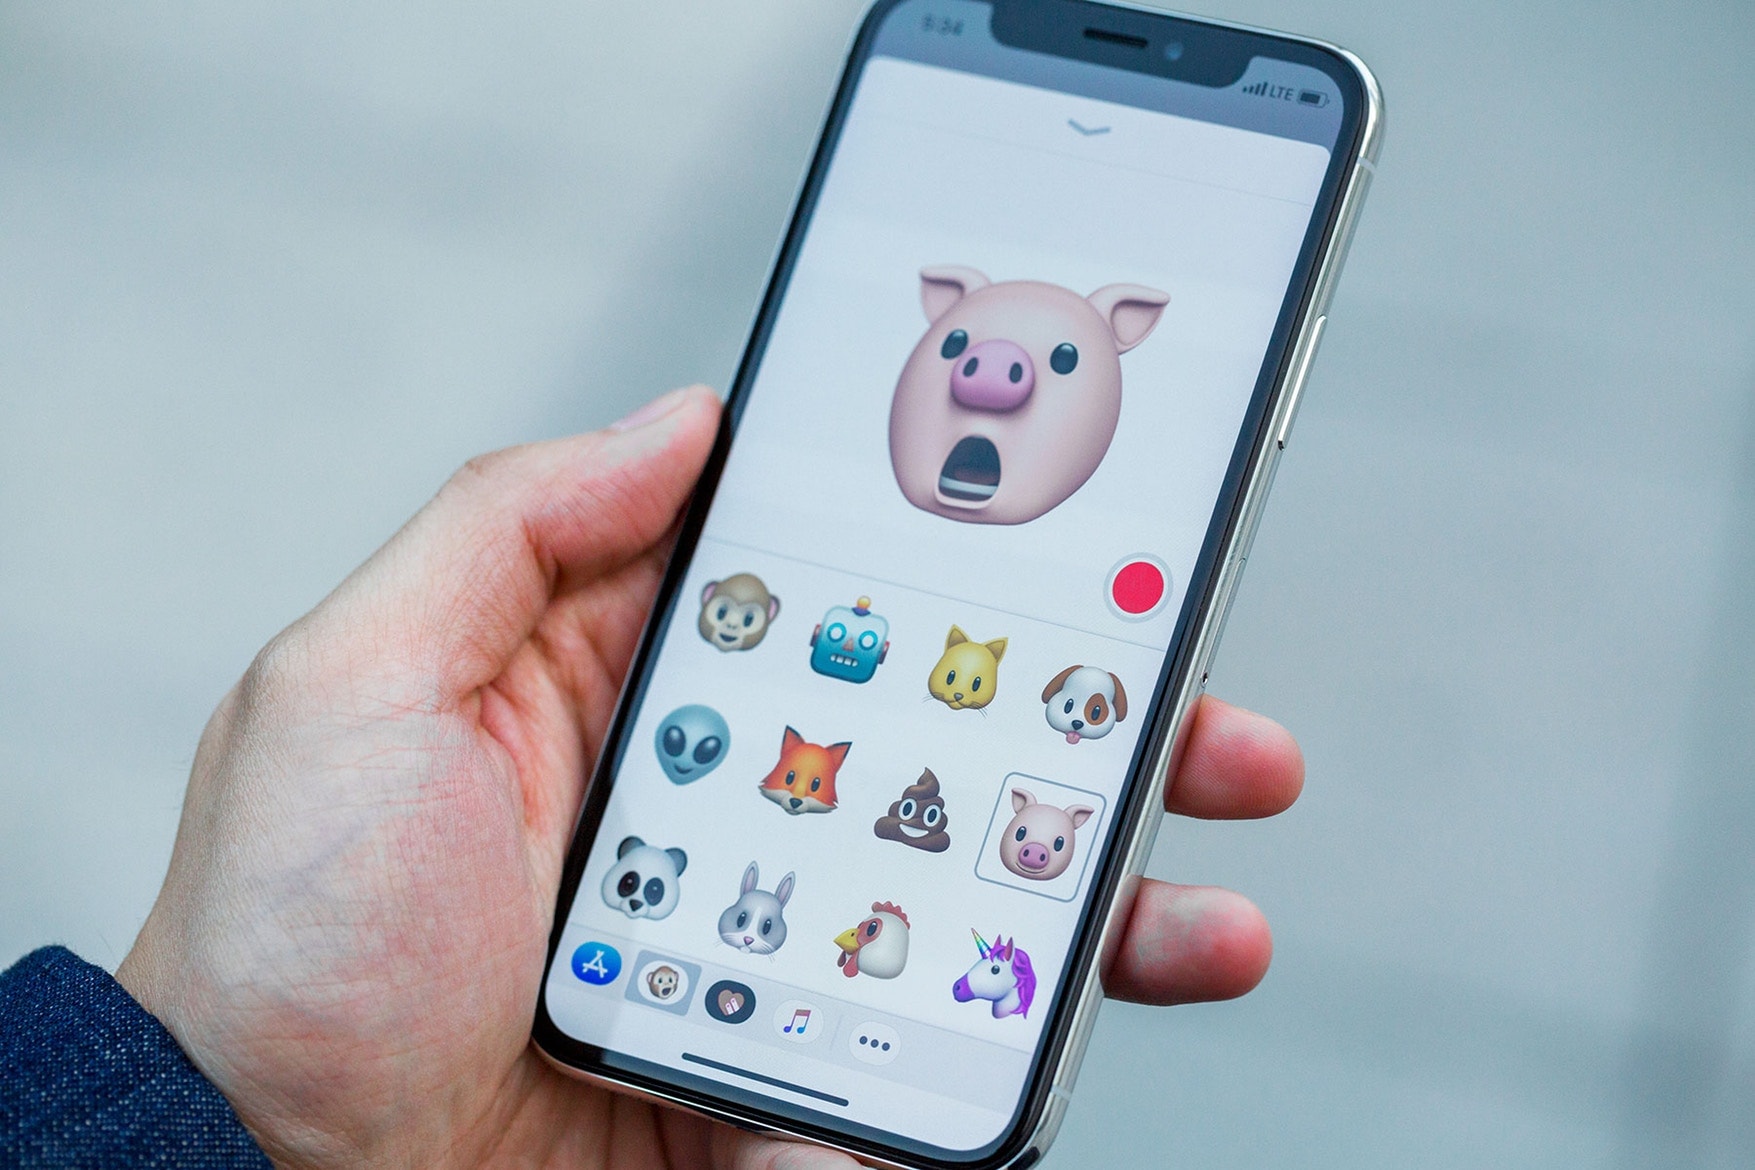 Apple 公佈美國人最常用的 Emoji 表情符號 Top 10 排名